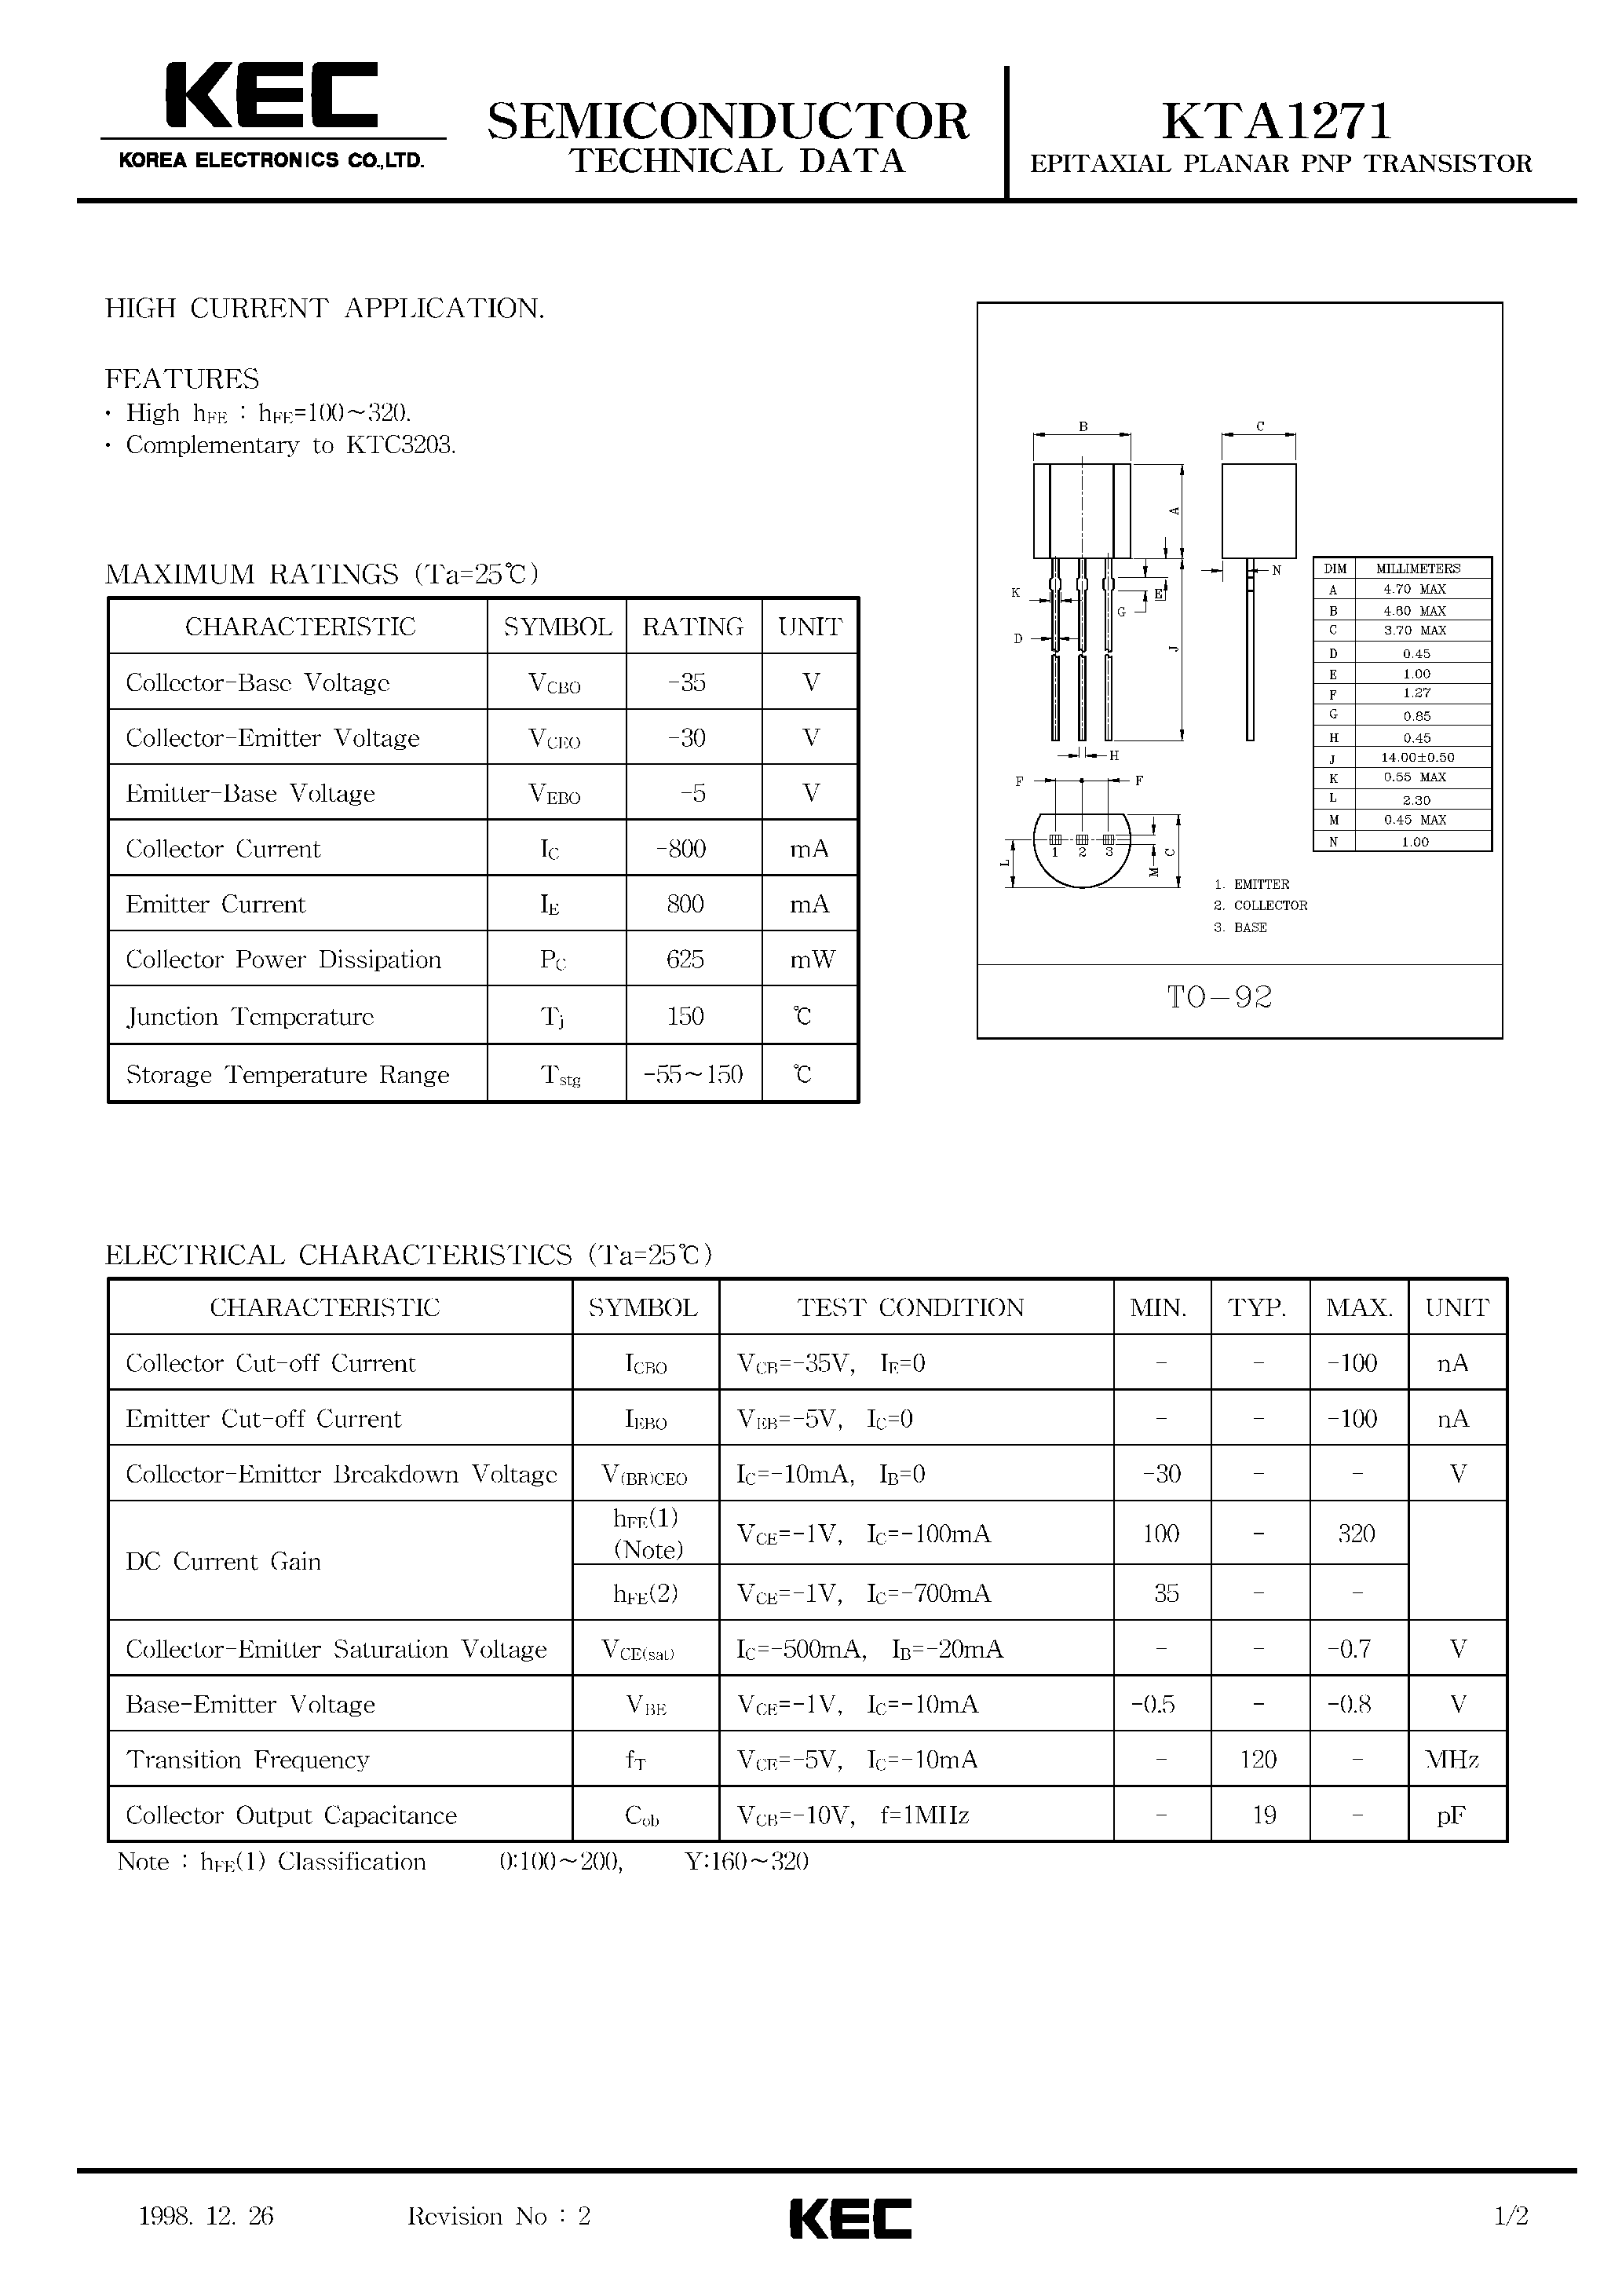 Datasheet KTA1271 - EPITAXIAL PLANAR PNP TRANSISTOR (HIGH CURRENT) page 1